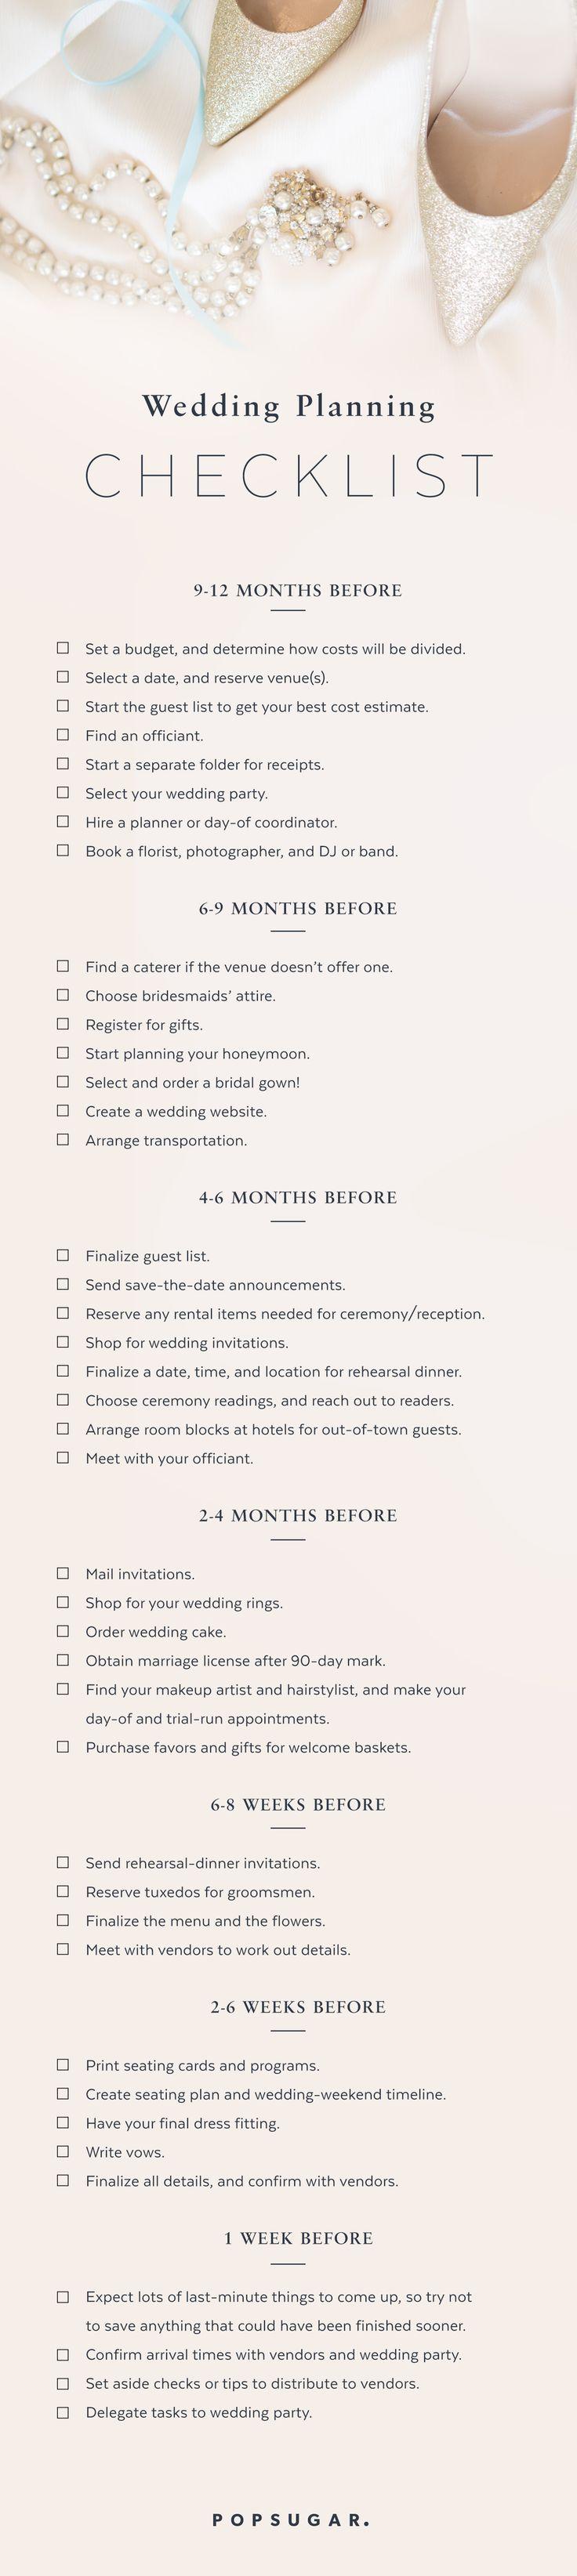 Свадьба - Download The Ultimate Wedding Planning Checklist!